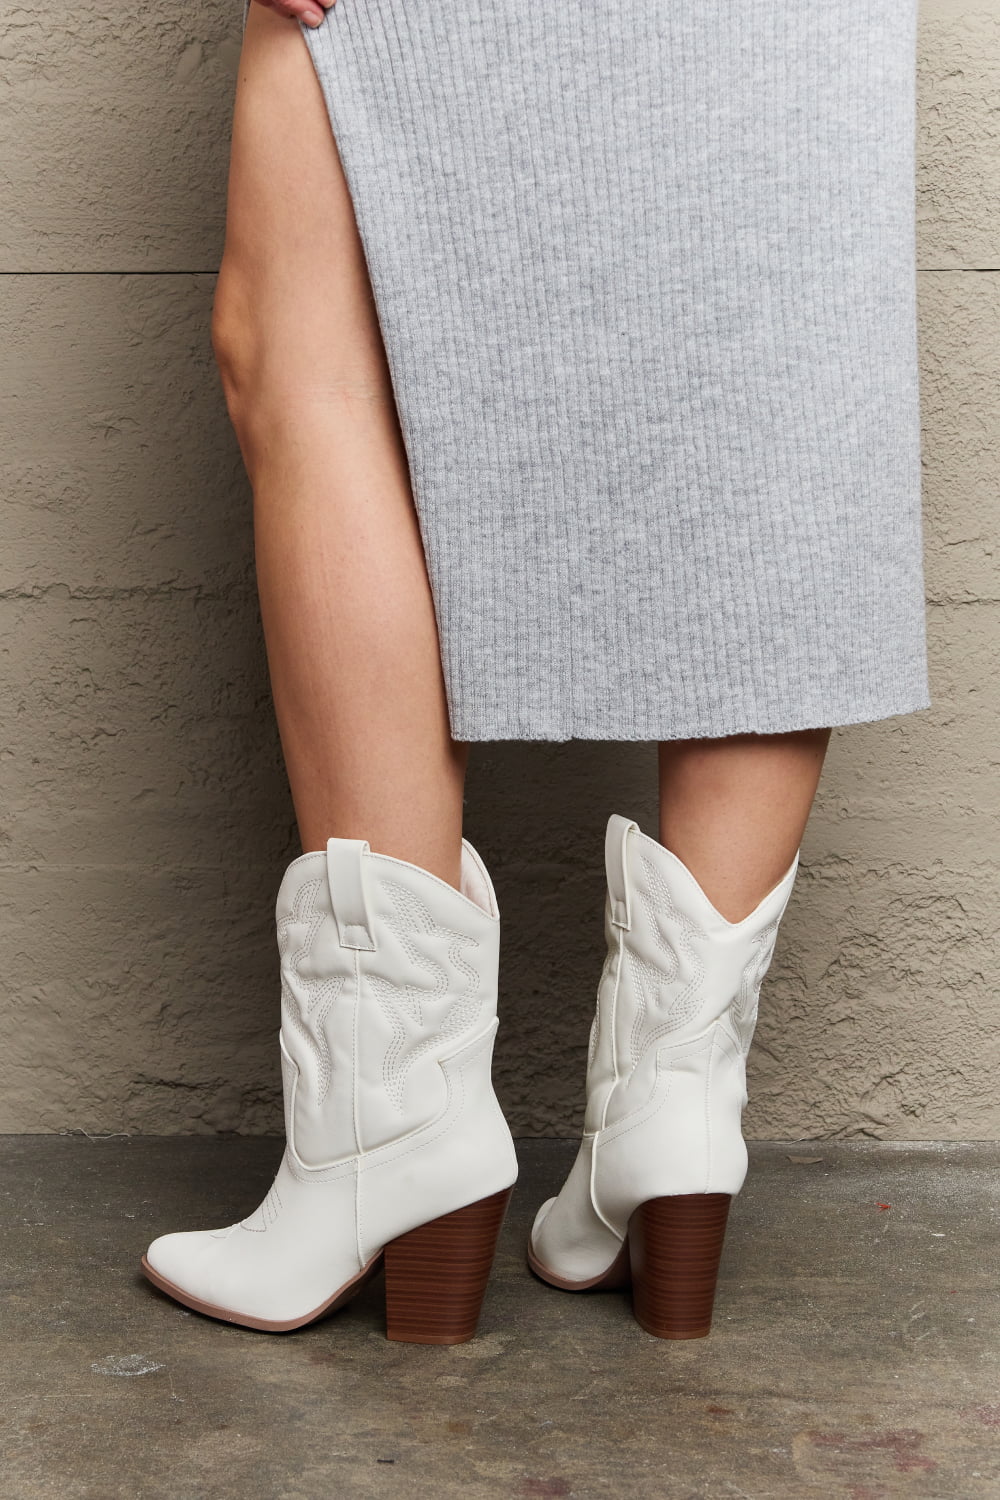 Legend Footwear Bella Cowboy Boots - Fashion Girl Online Store